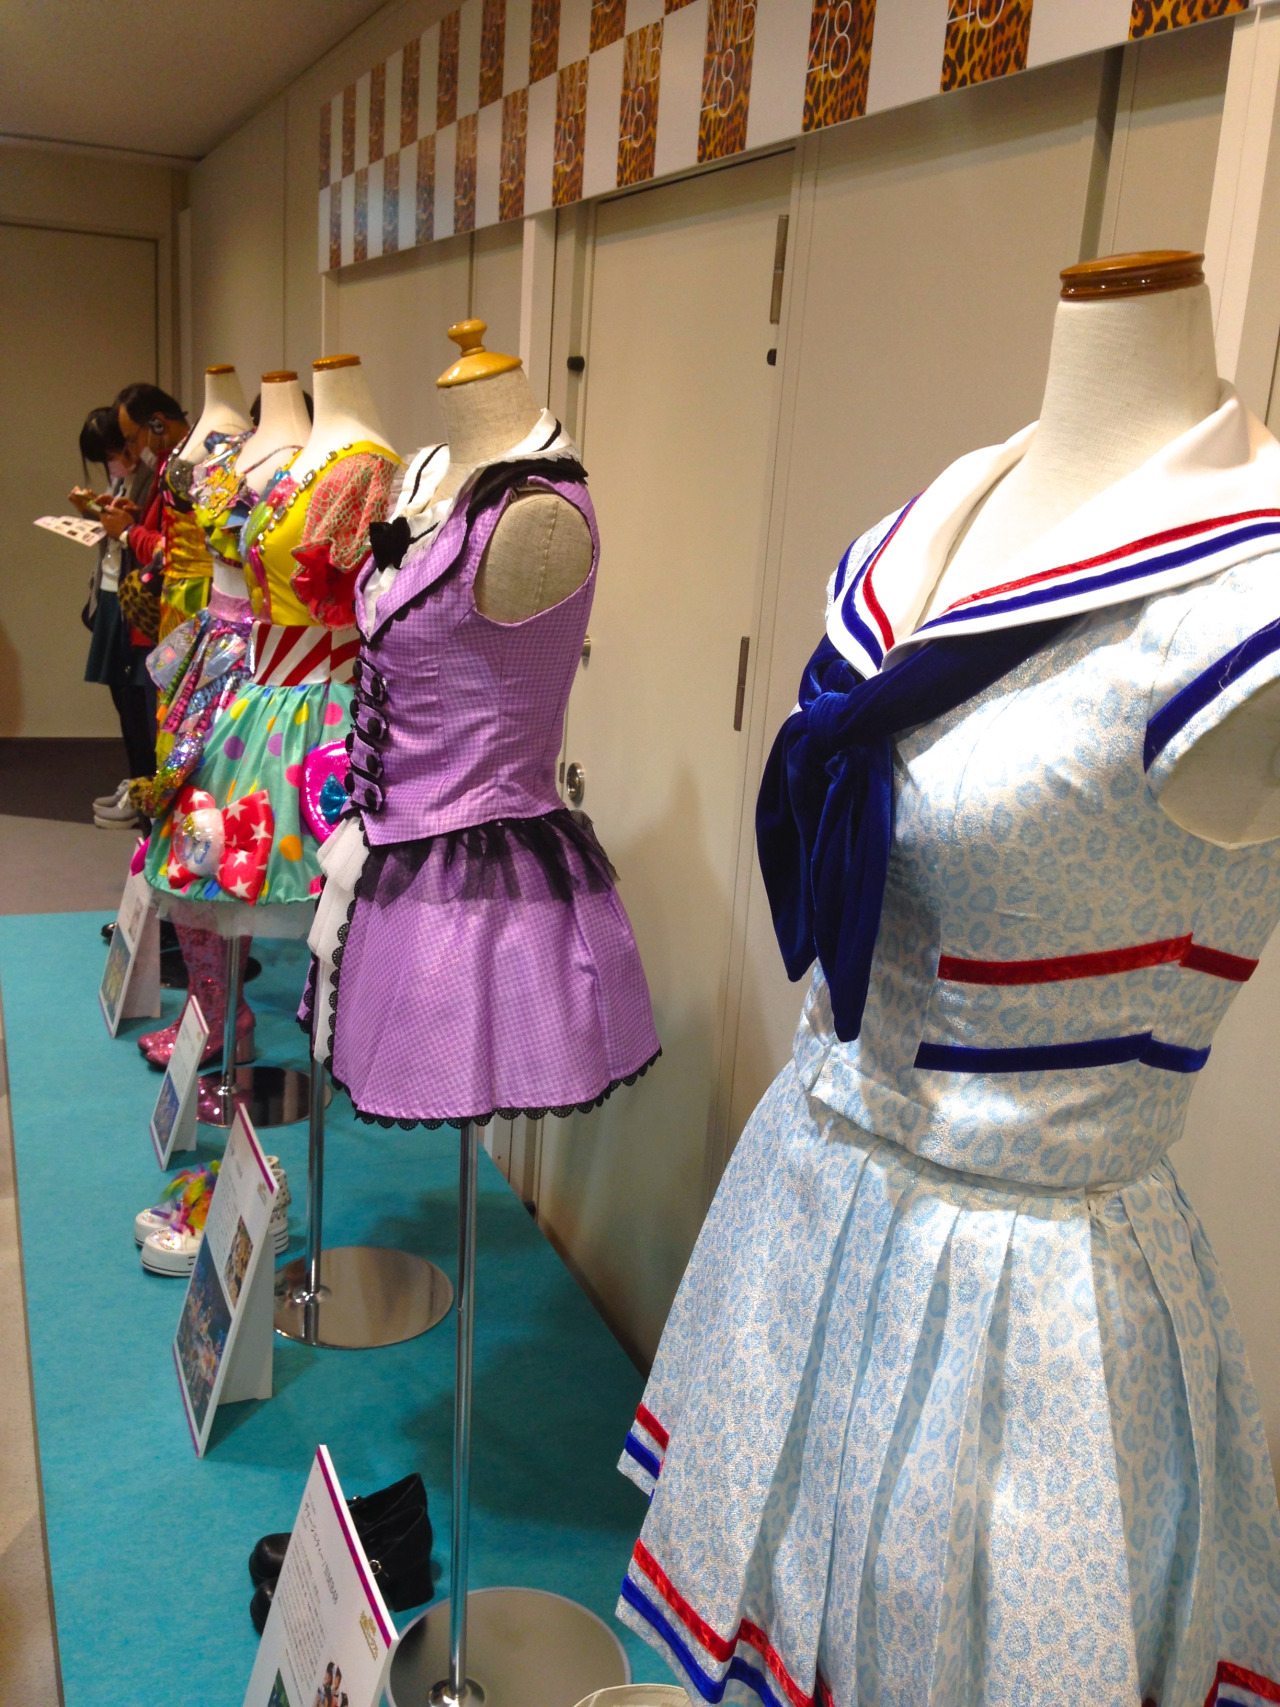 AKB48 Costume Museum - AKB48 Photo (38354751) - Fanpop